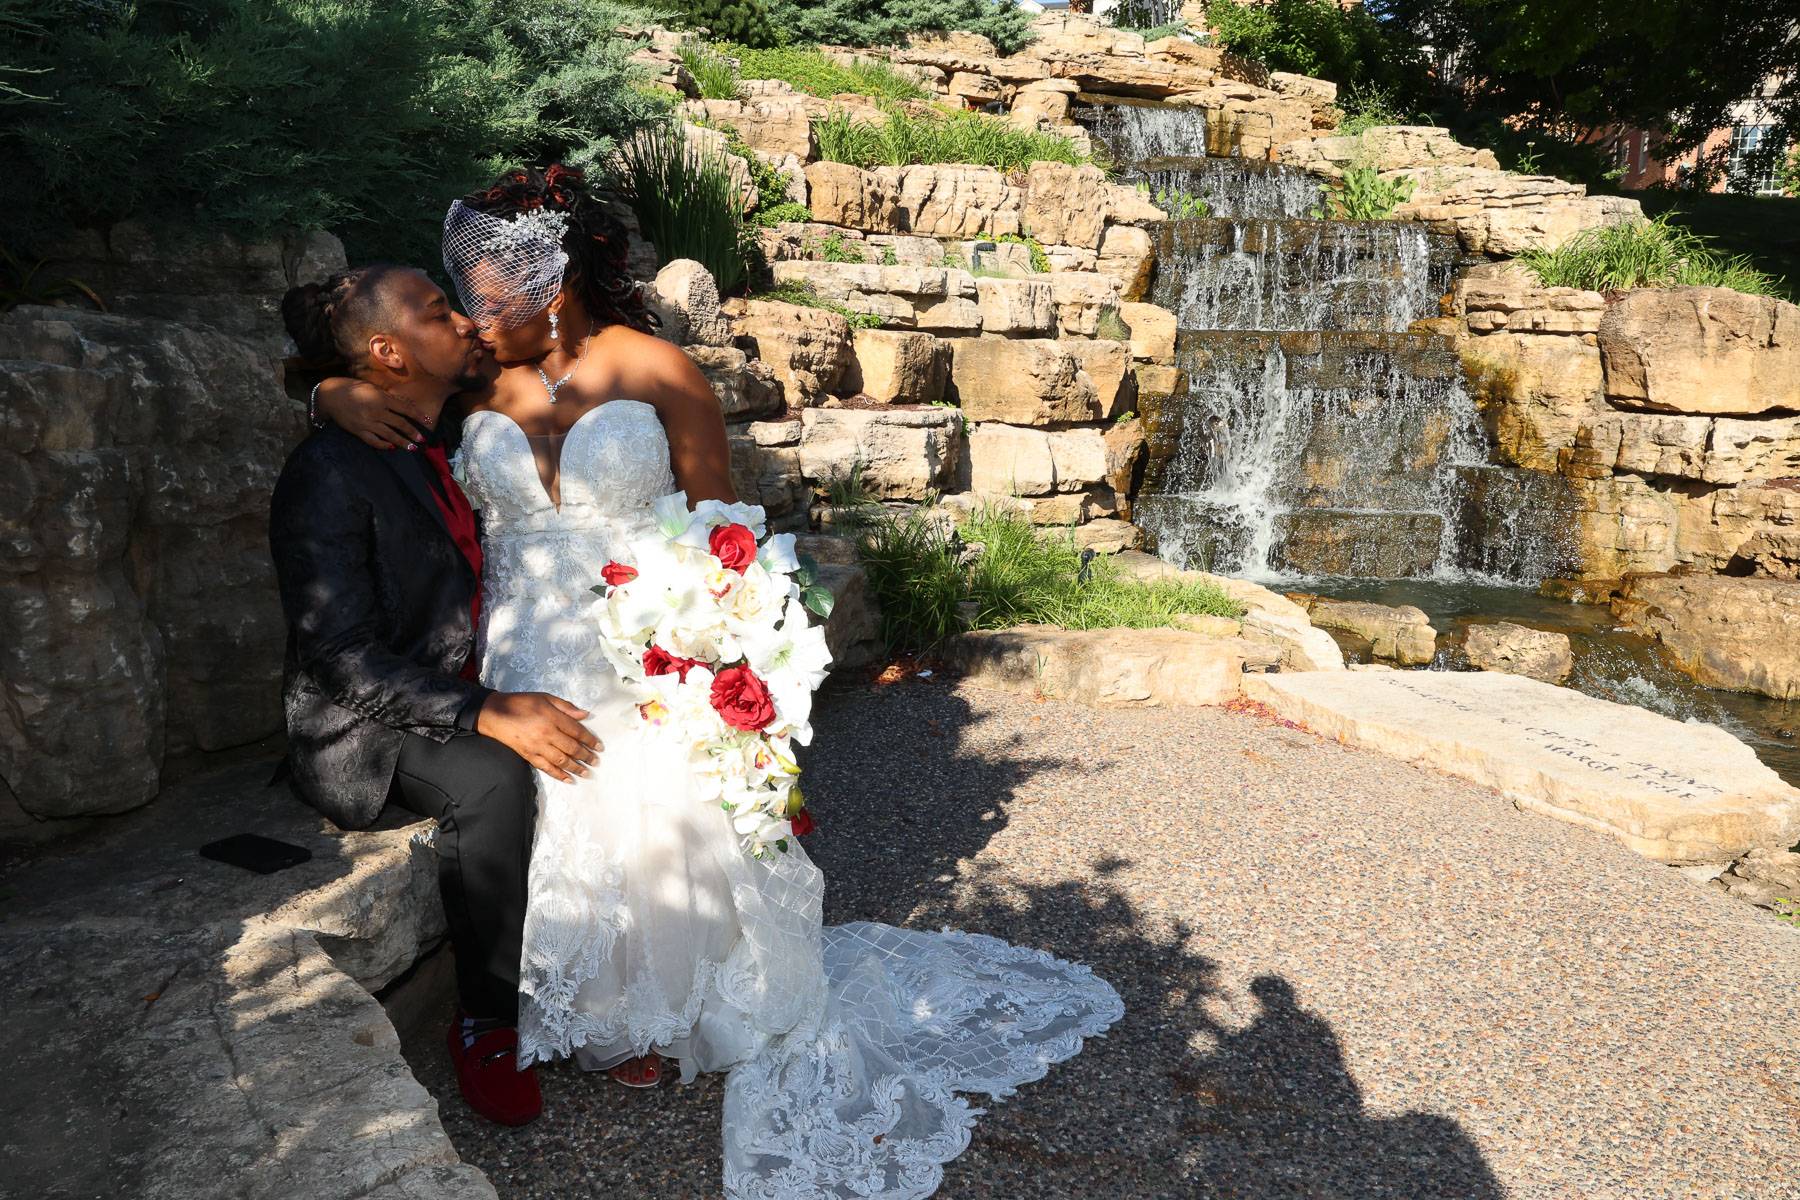 The newlyweds kiss near a waterfall